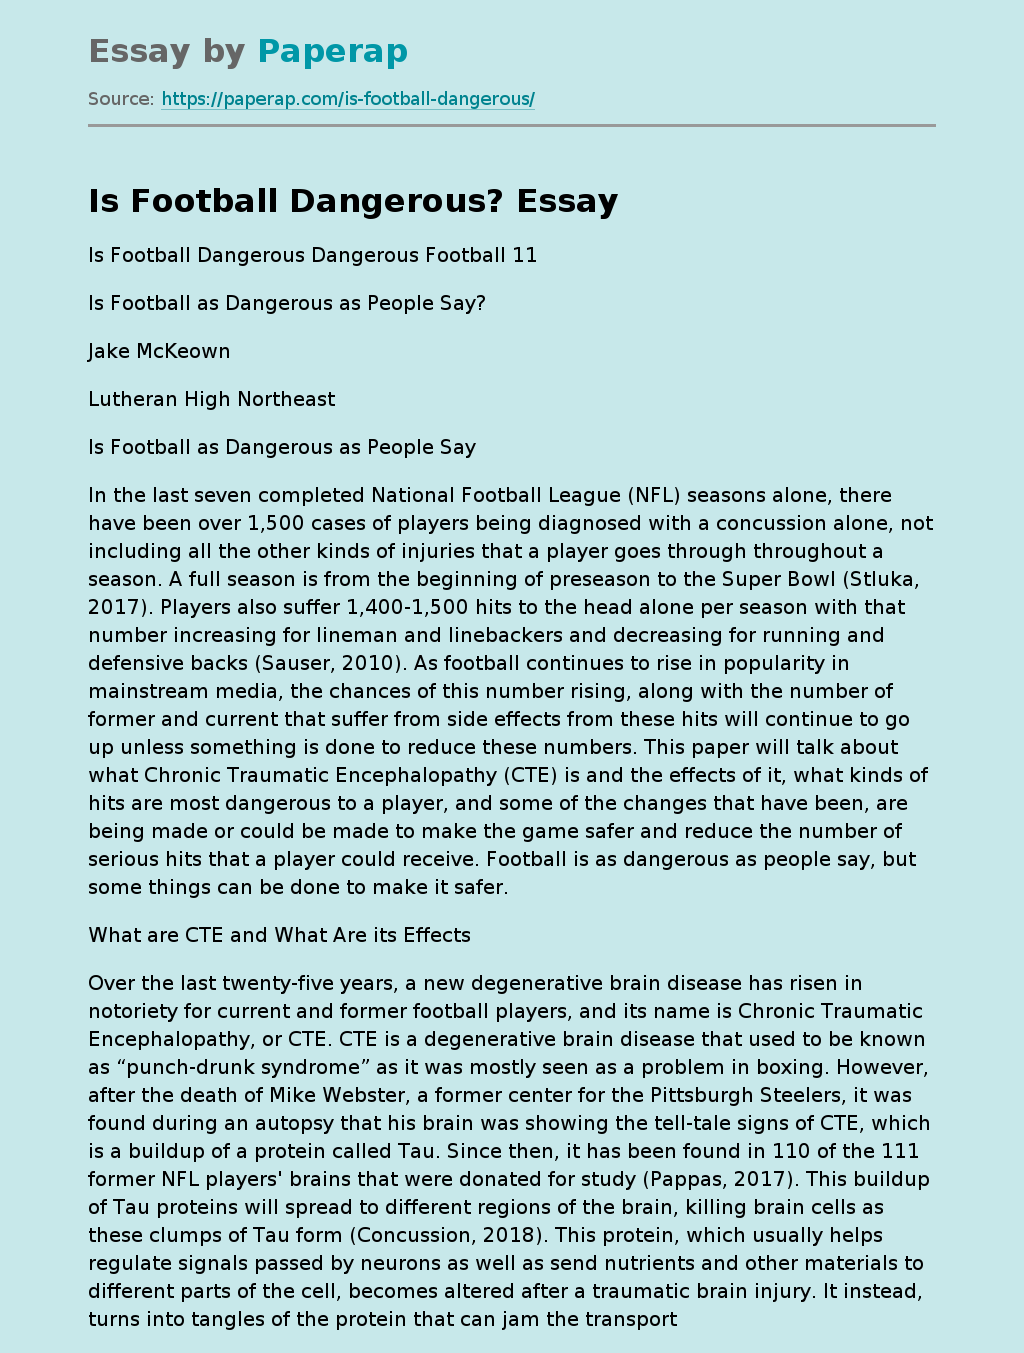 Is Football Dangerous?